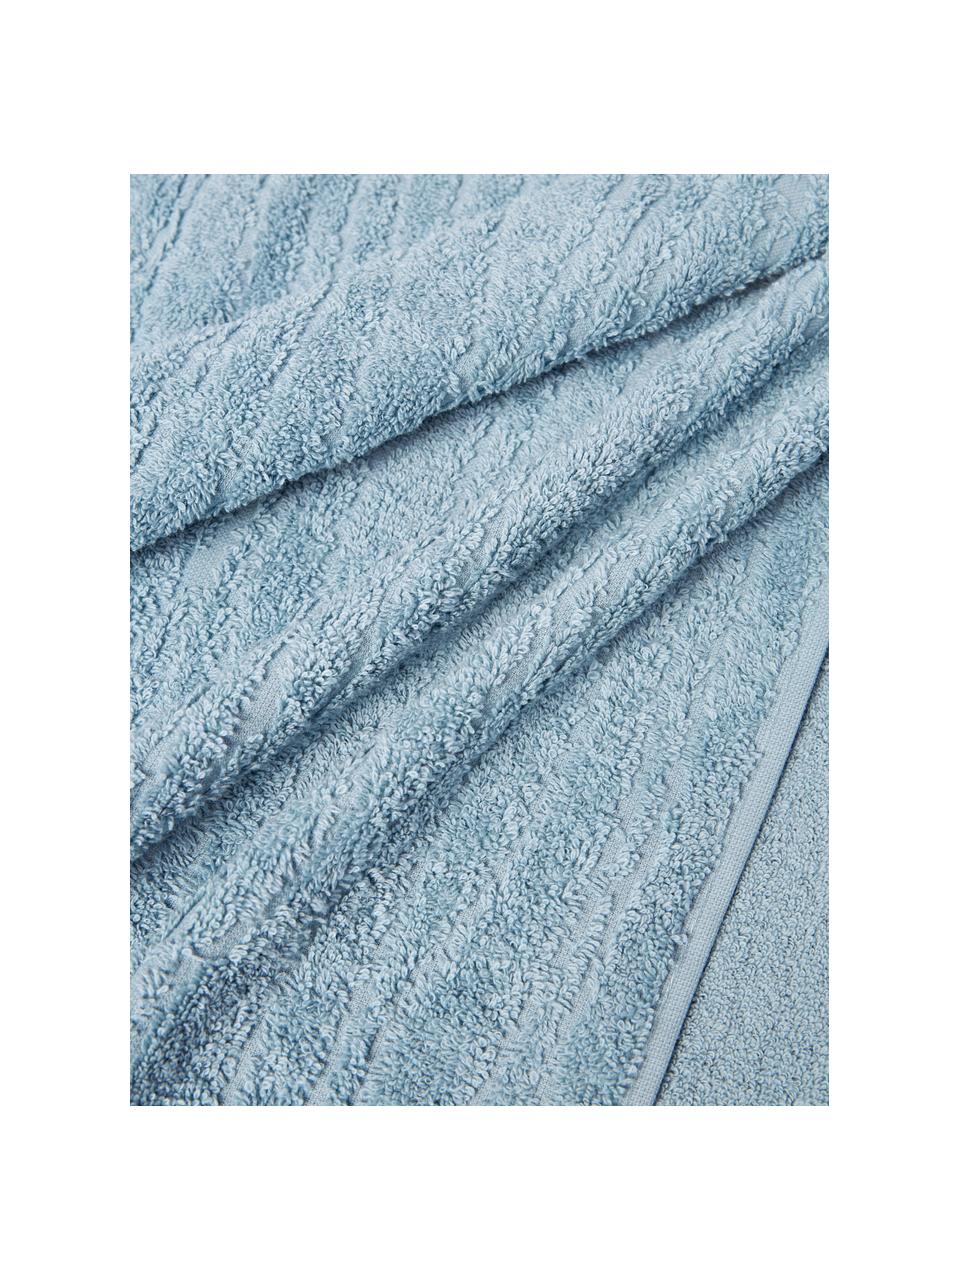 Set di asciugamani Audrina, varie misure, Grigio-blu, Set di 4 (asciugamano e telo da bagno)